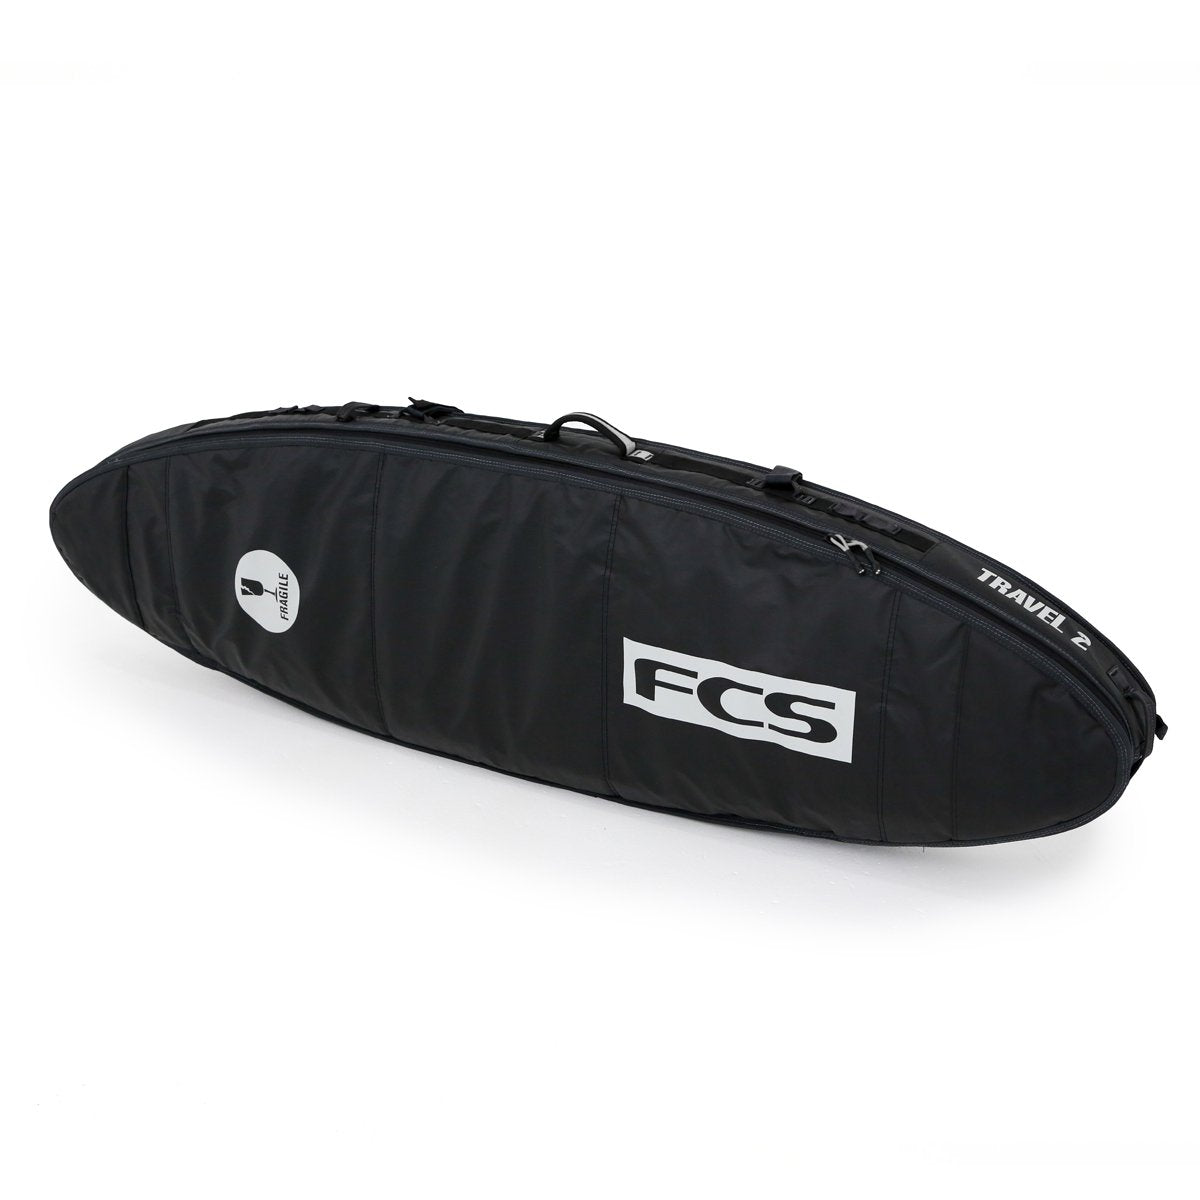 FCS Travel 2 All Purpose Boardbag Black-Grey 6ft3in